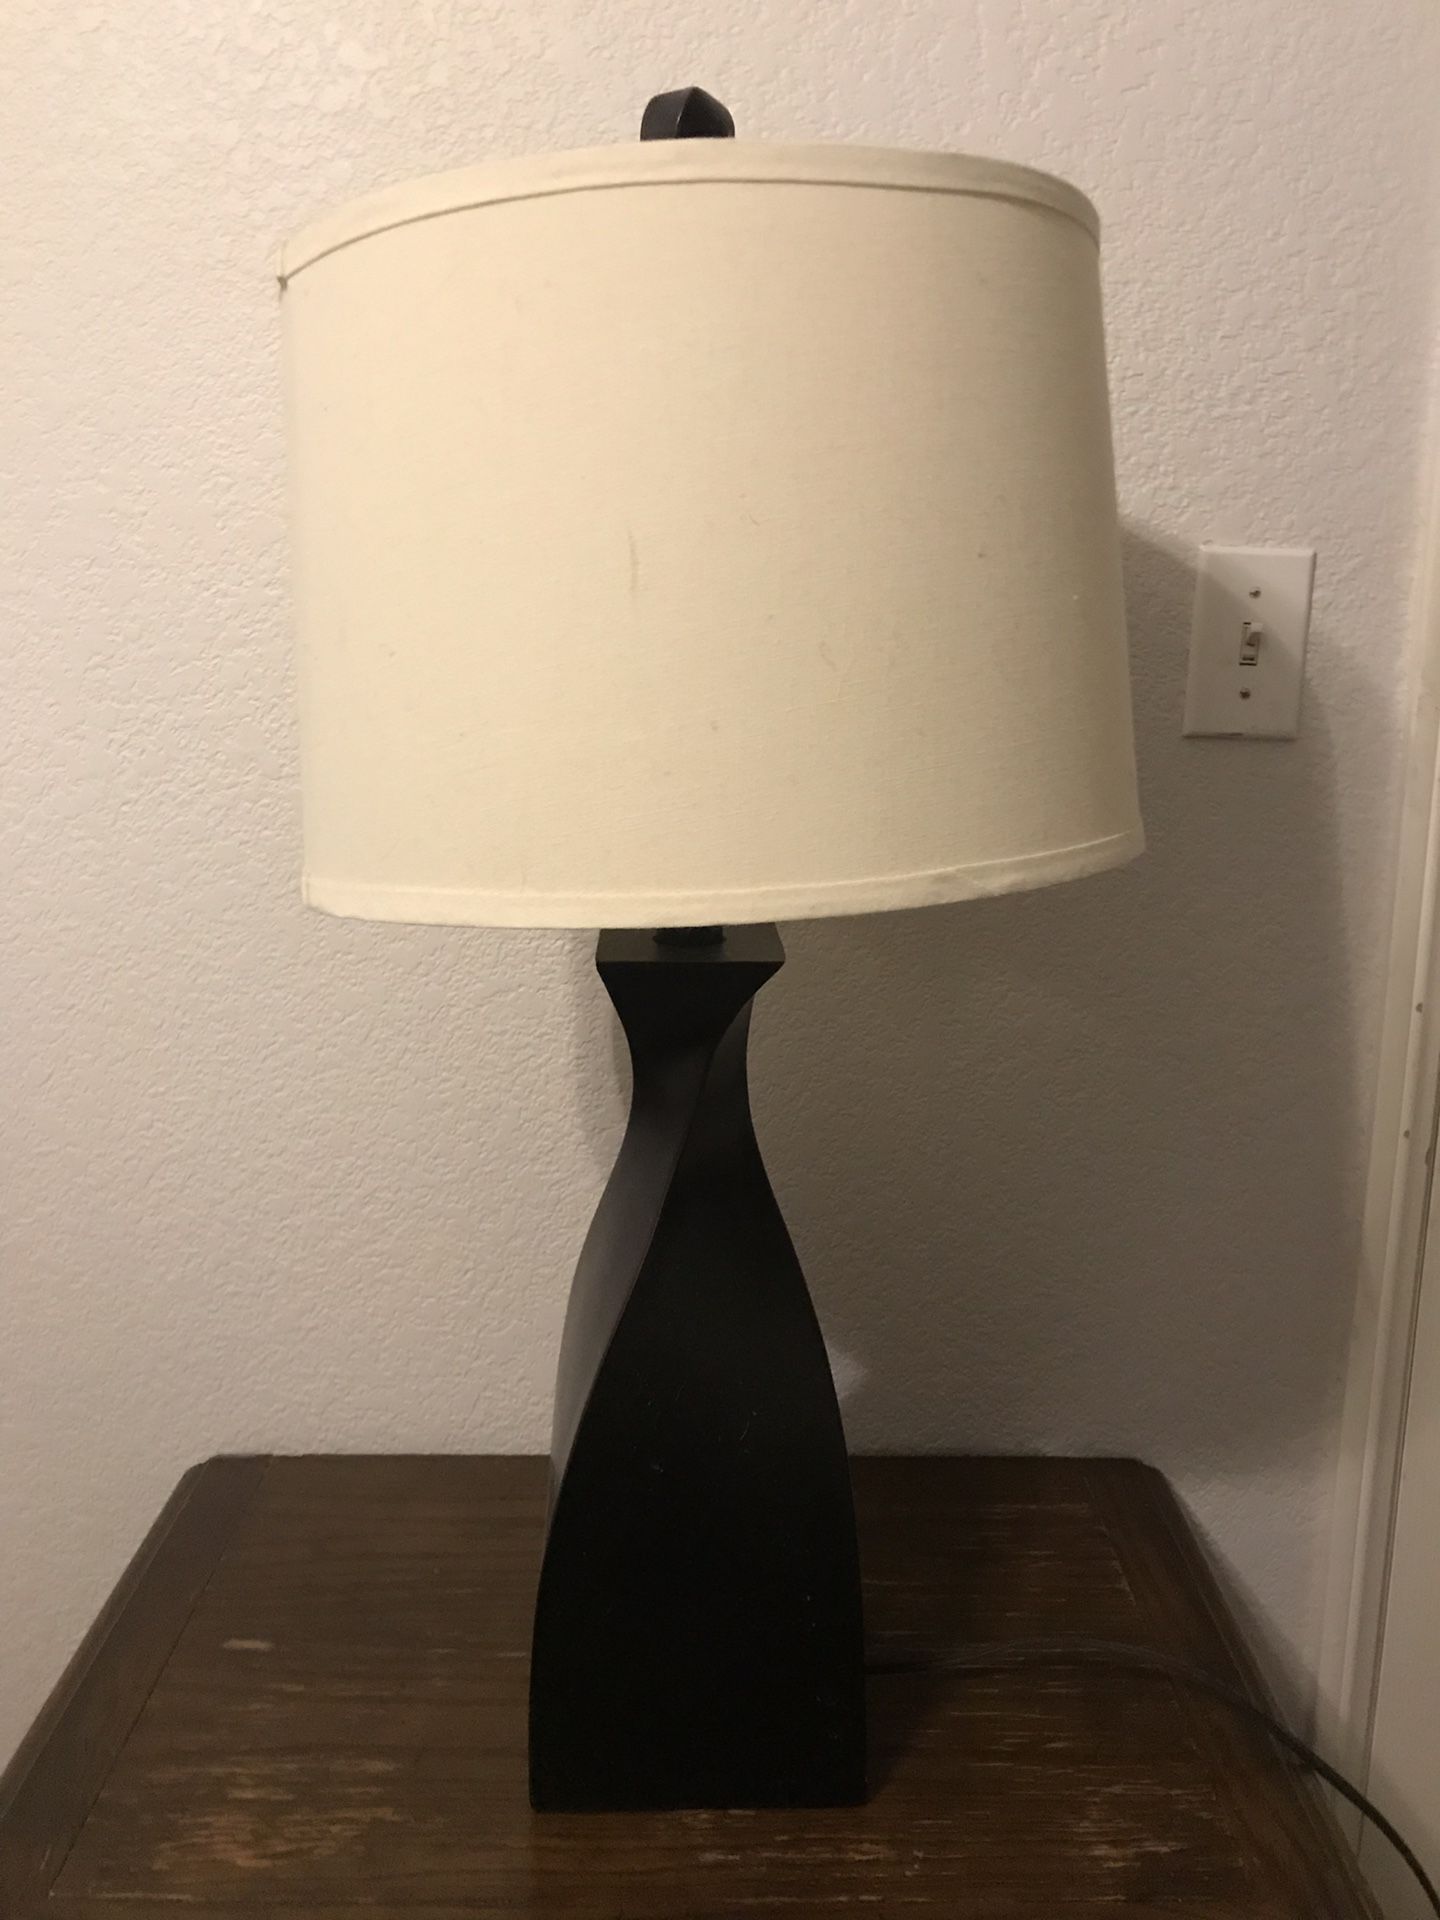 Dark brown lamp with white shade